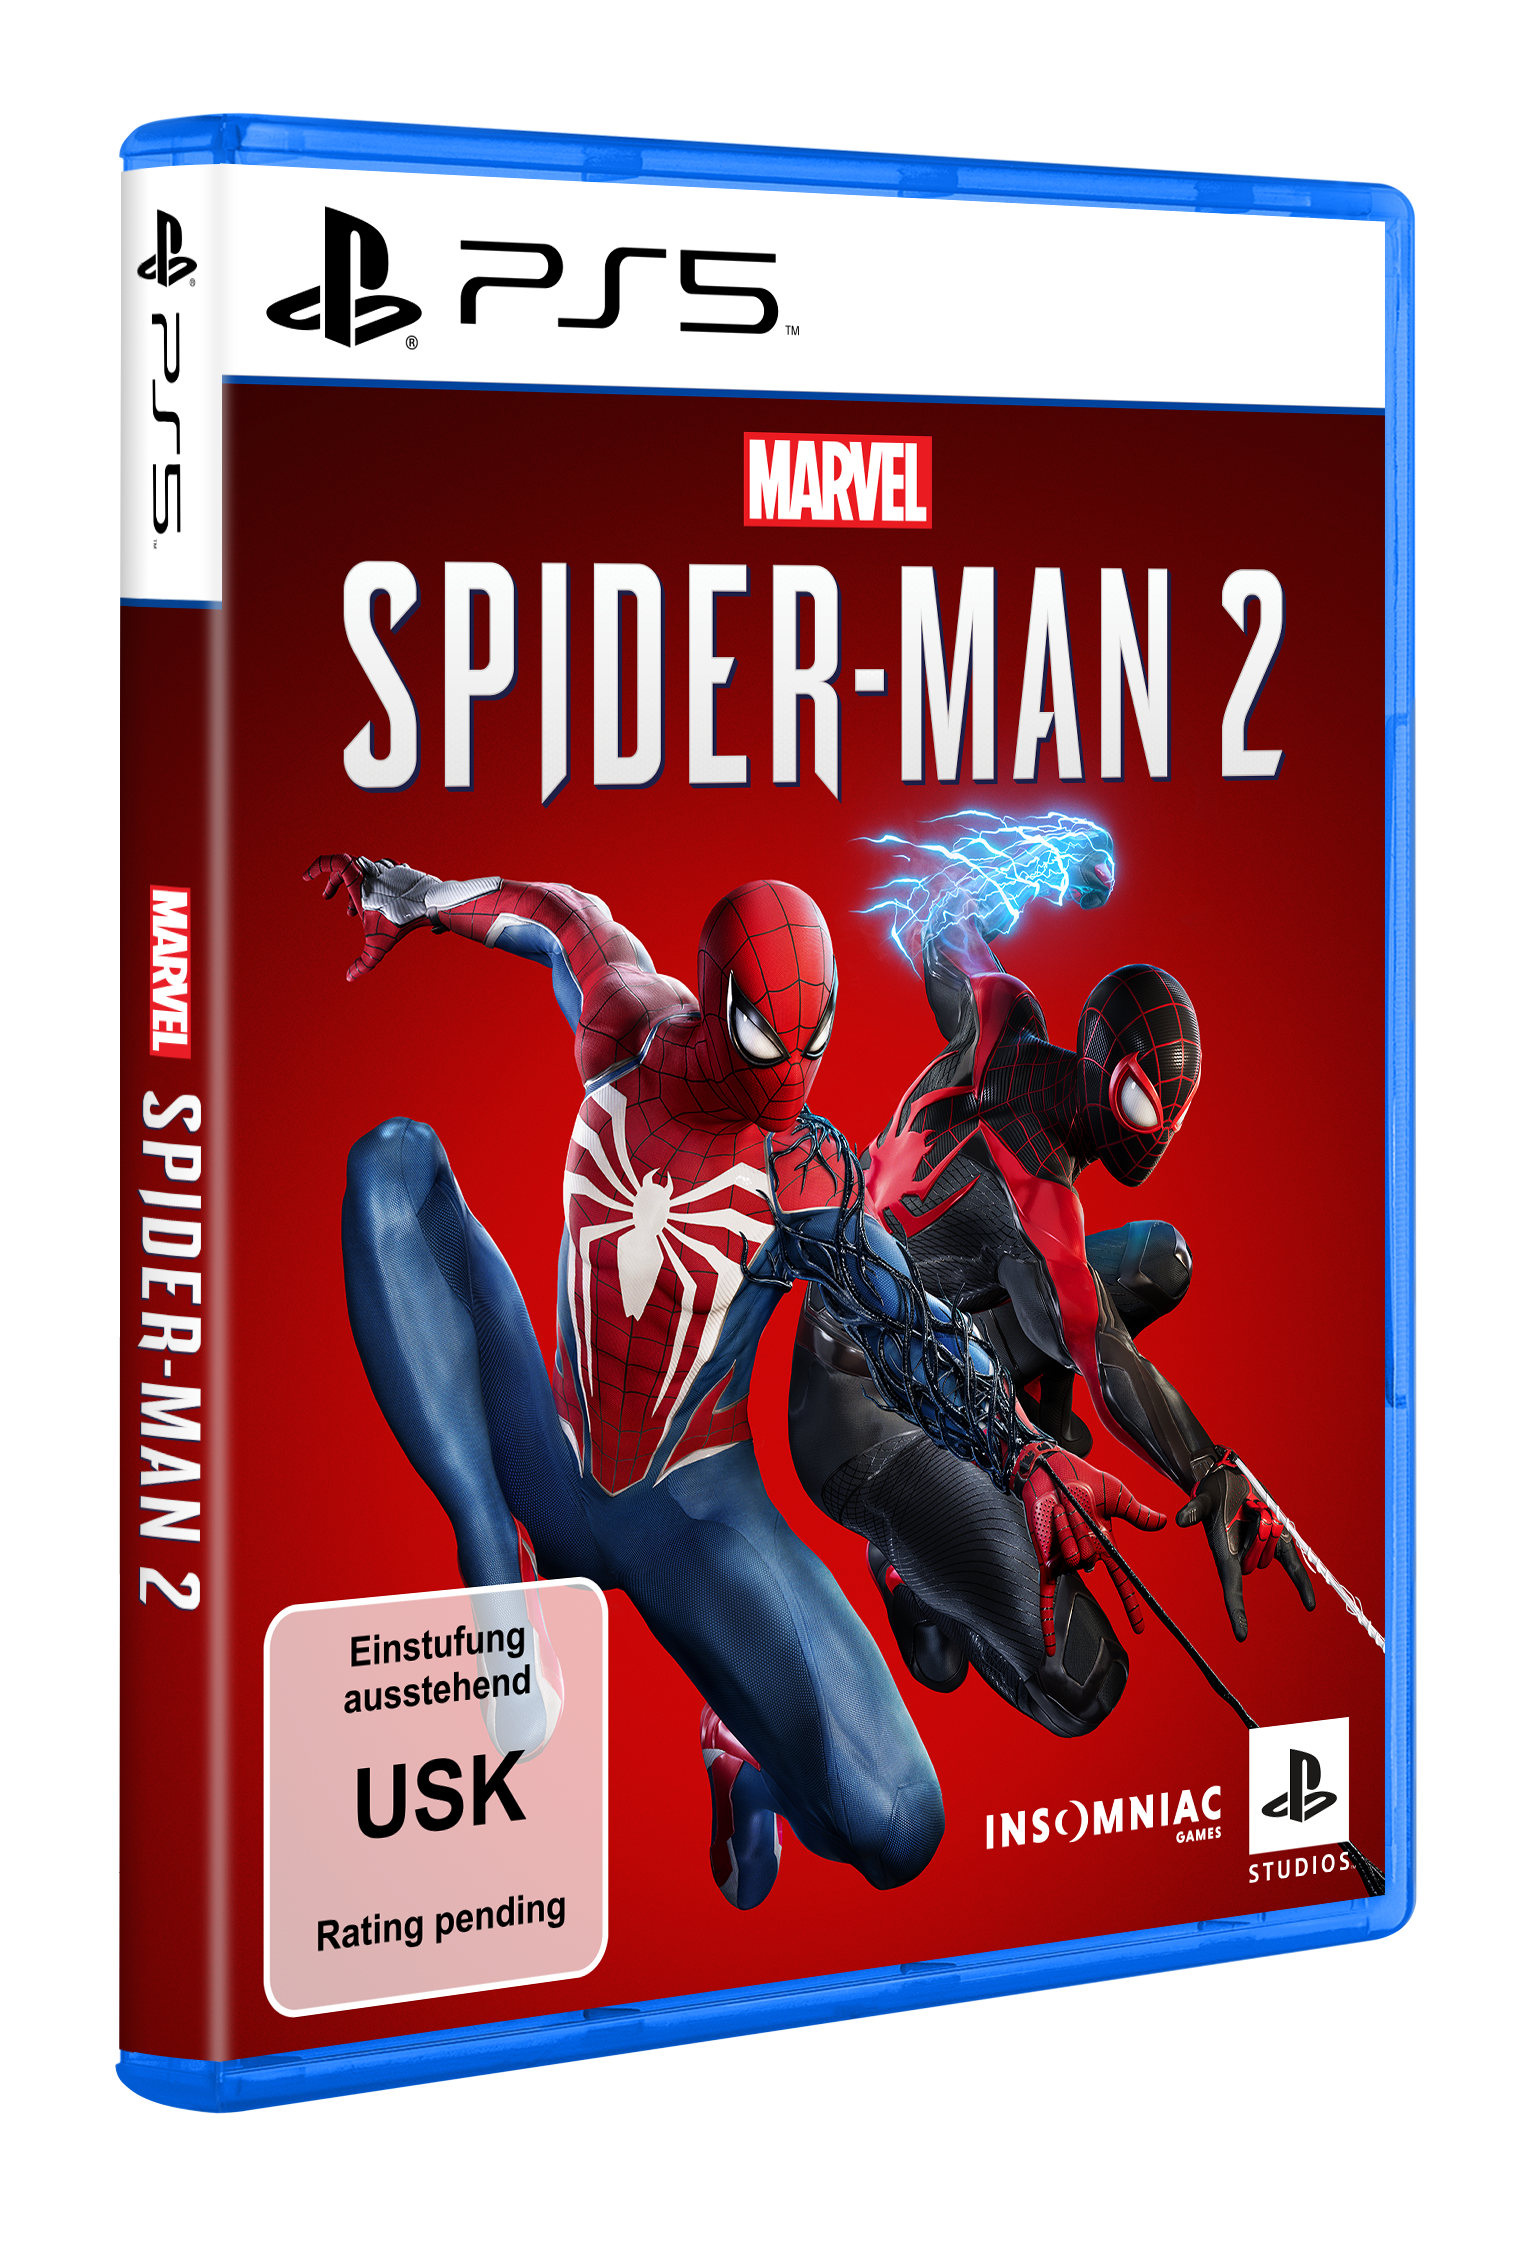 9a68875a0d576ad133956a7919db545f943c13d3 - Marvel’s Spider-Man 2 kommt am 20. Oktober, exklusiv auf PS5, Collector’s &amp; Digital Deluxe Editions im Detail